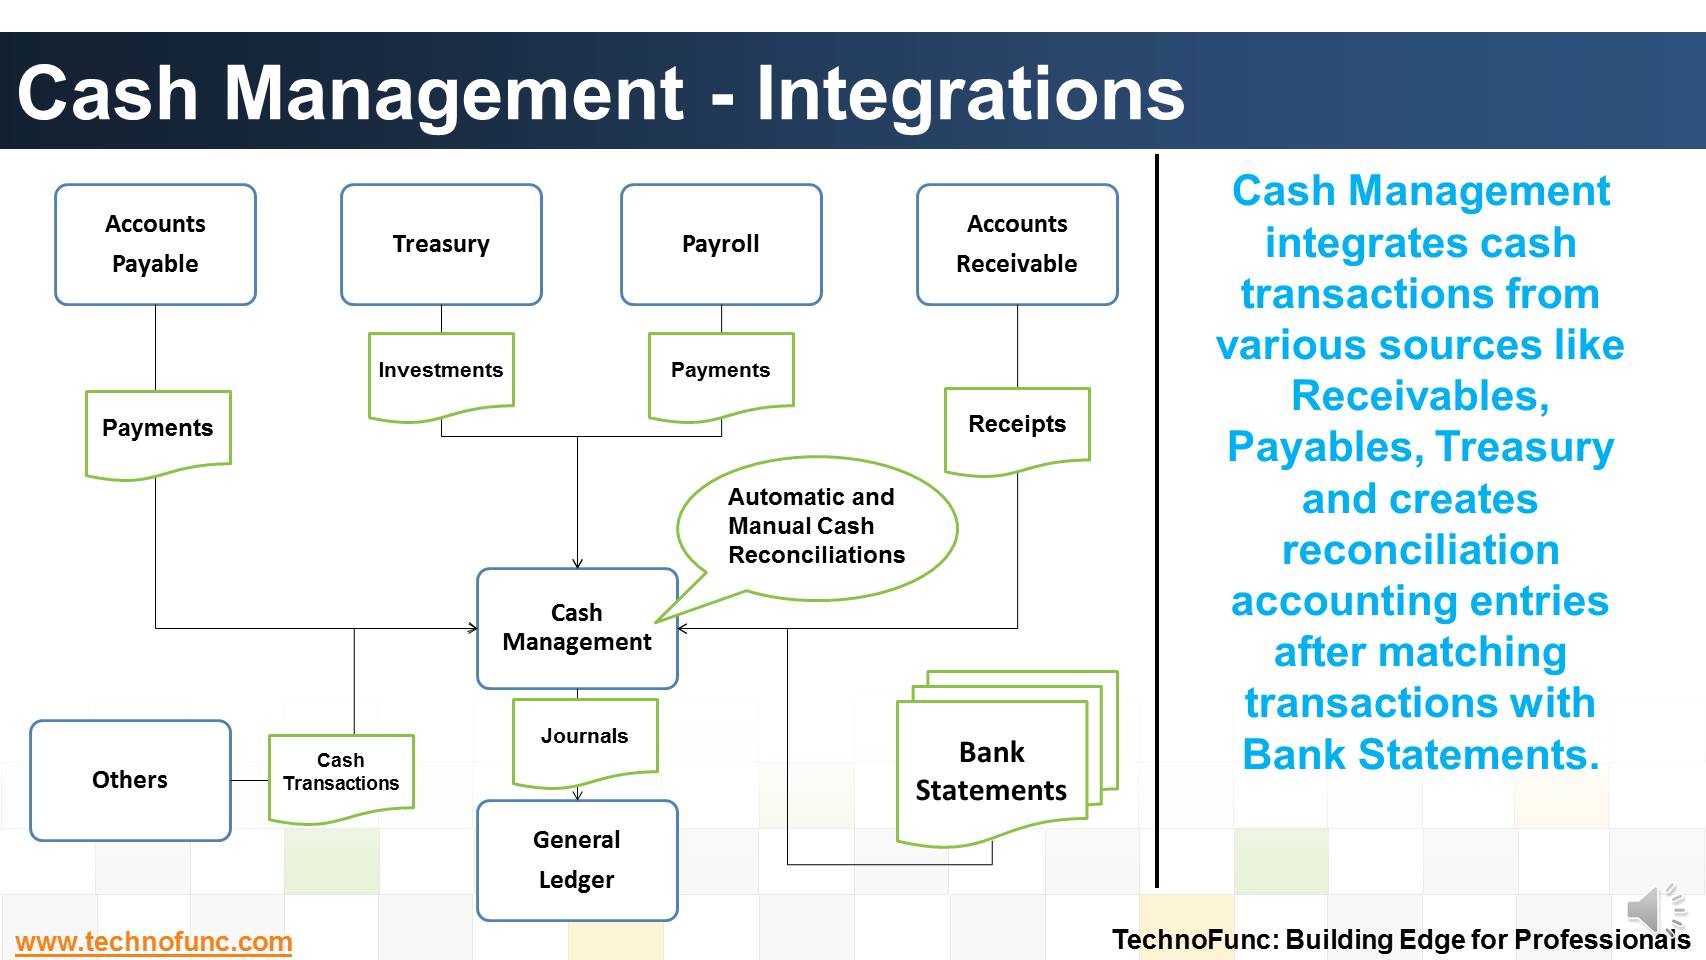 TechnoFunc - Cash Management - Integrations